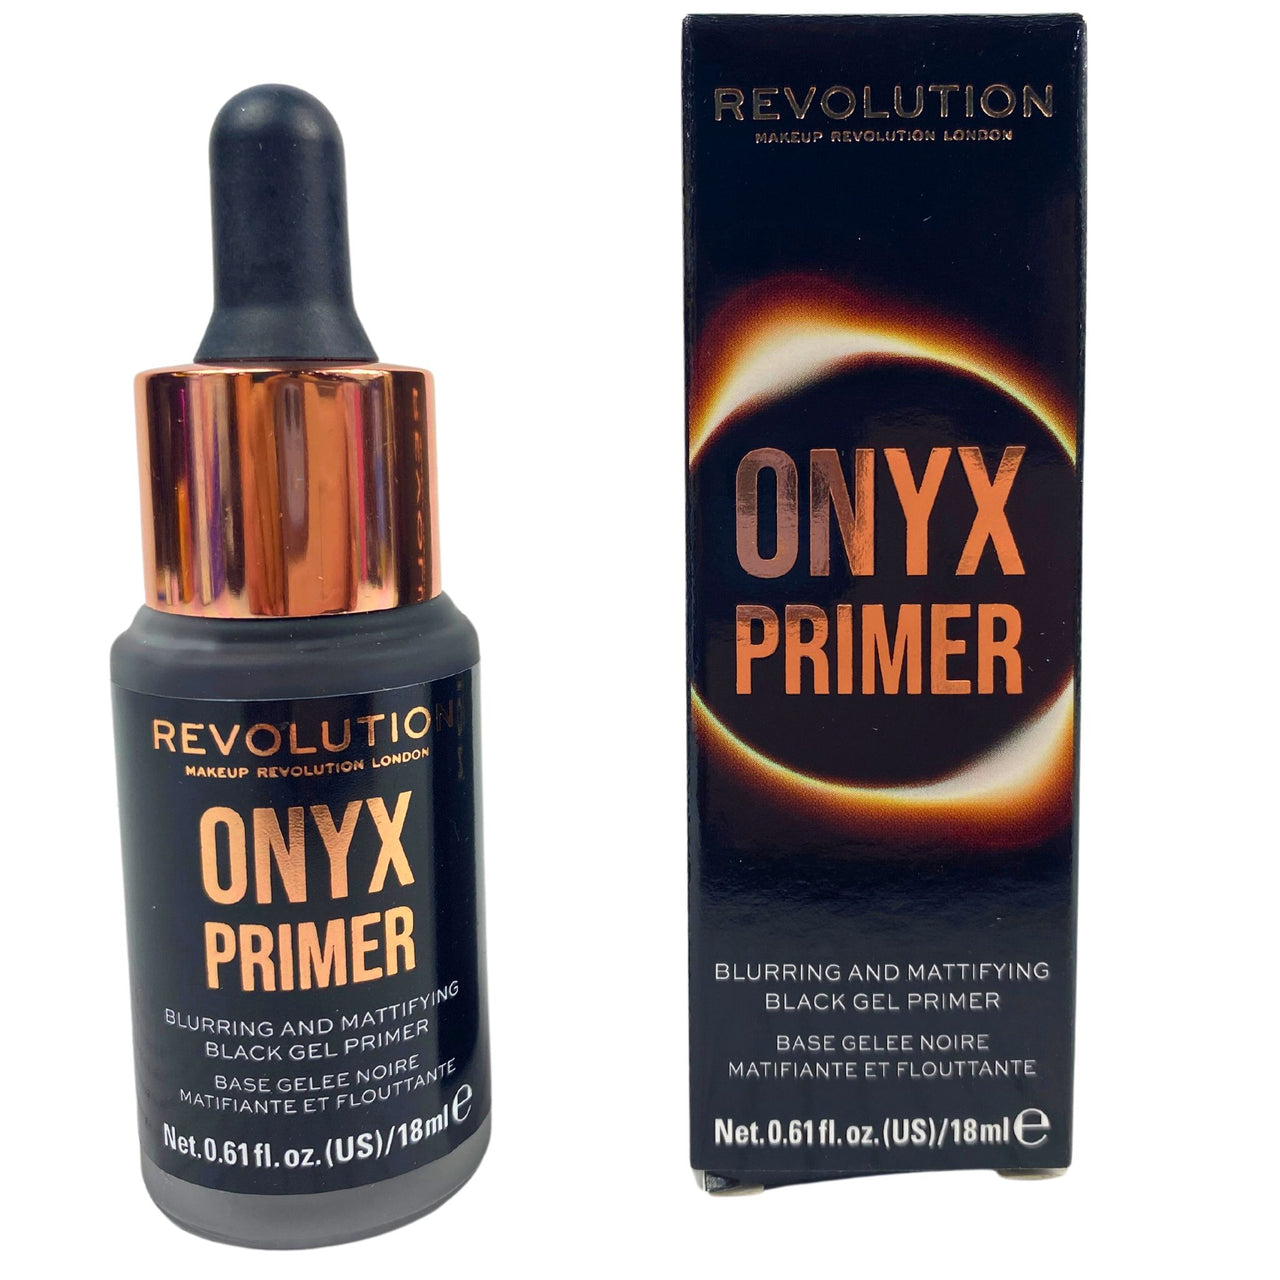 Revolution Onyx Primer Blurring & Mattifying Black Gel Primer 